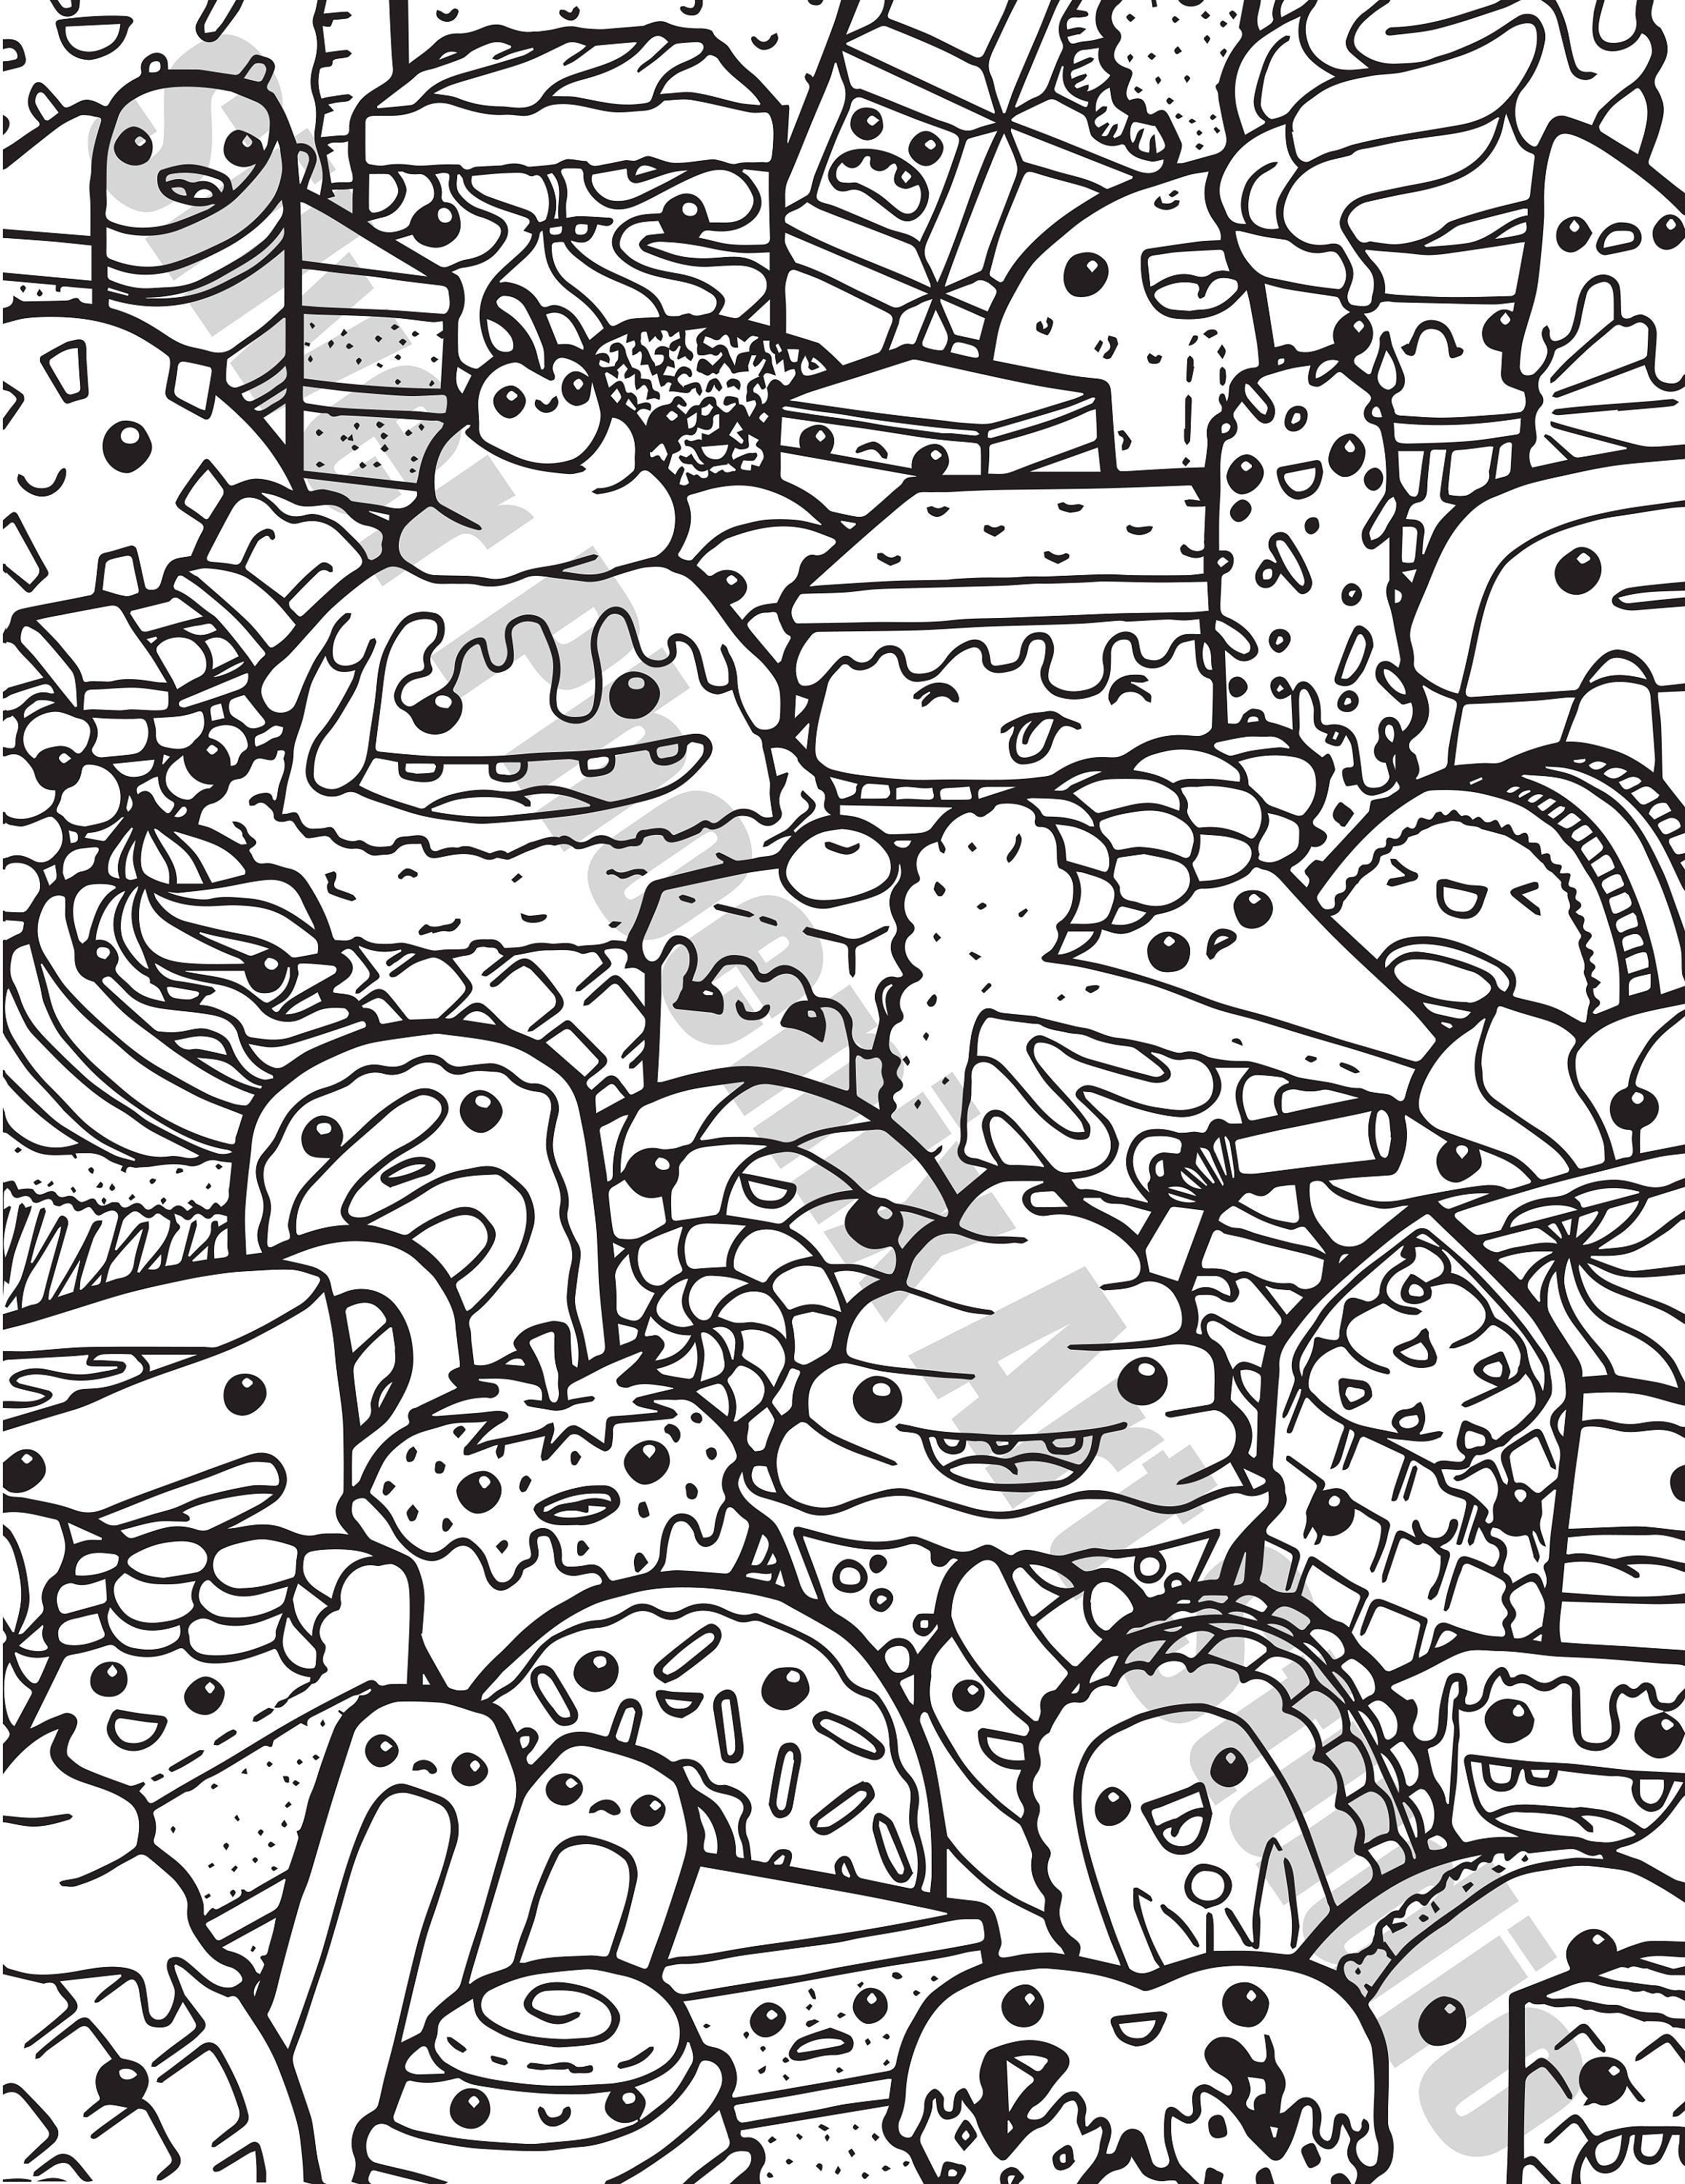 Download Kawaii Sweets Doodle Adult Coloring Page Printable Digital | Etsy